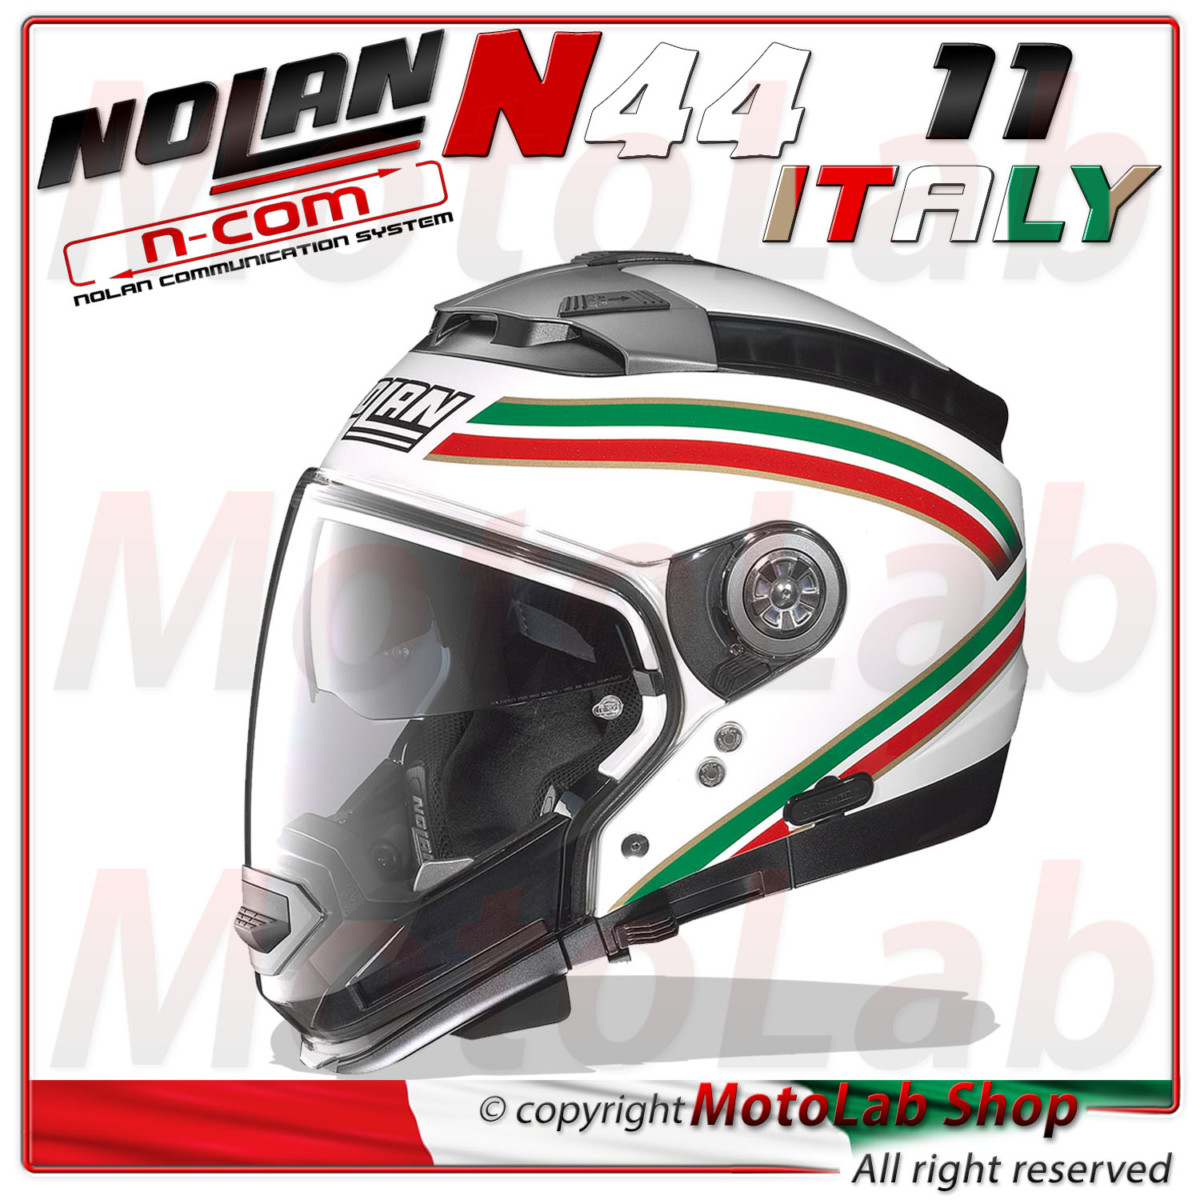 Casque Modulare Nolan N44 Italy N COM 11 Blanc Matallise Italie Taille